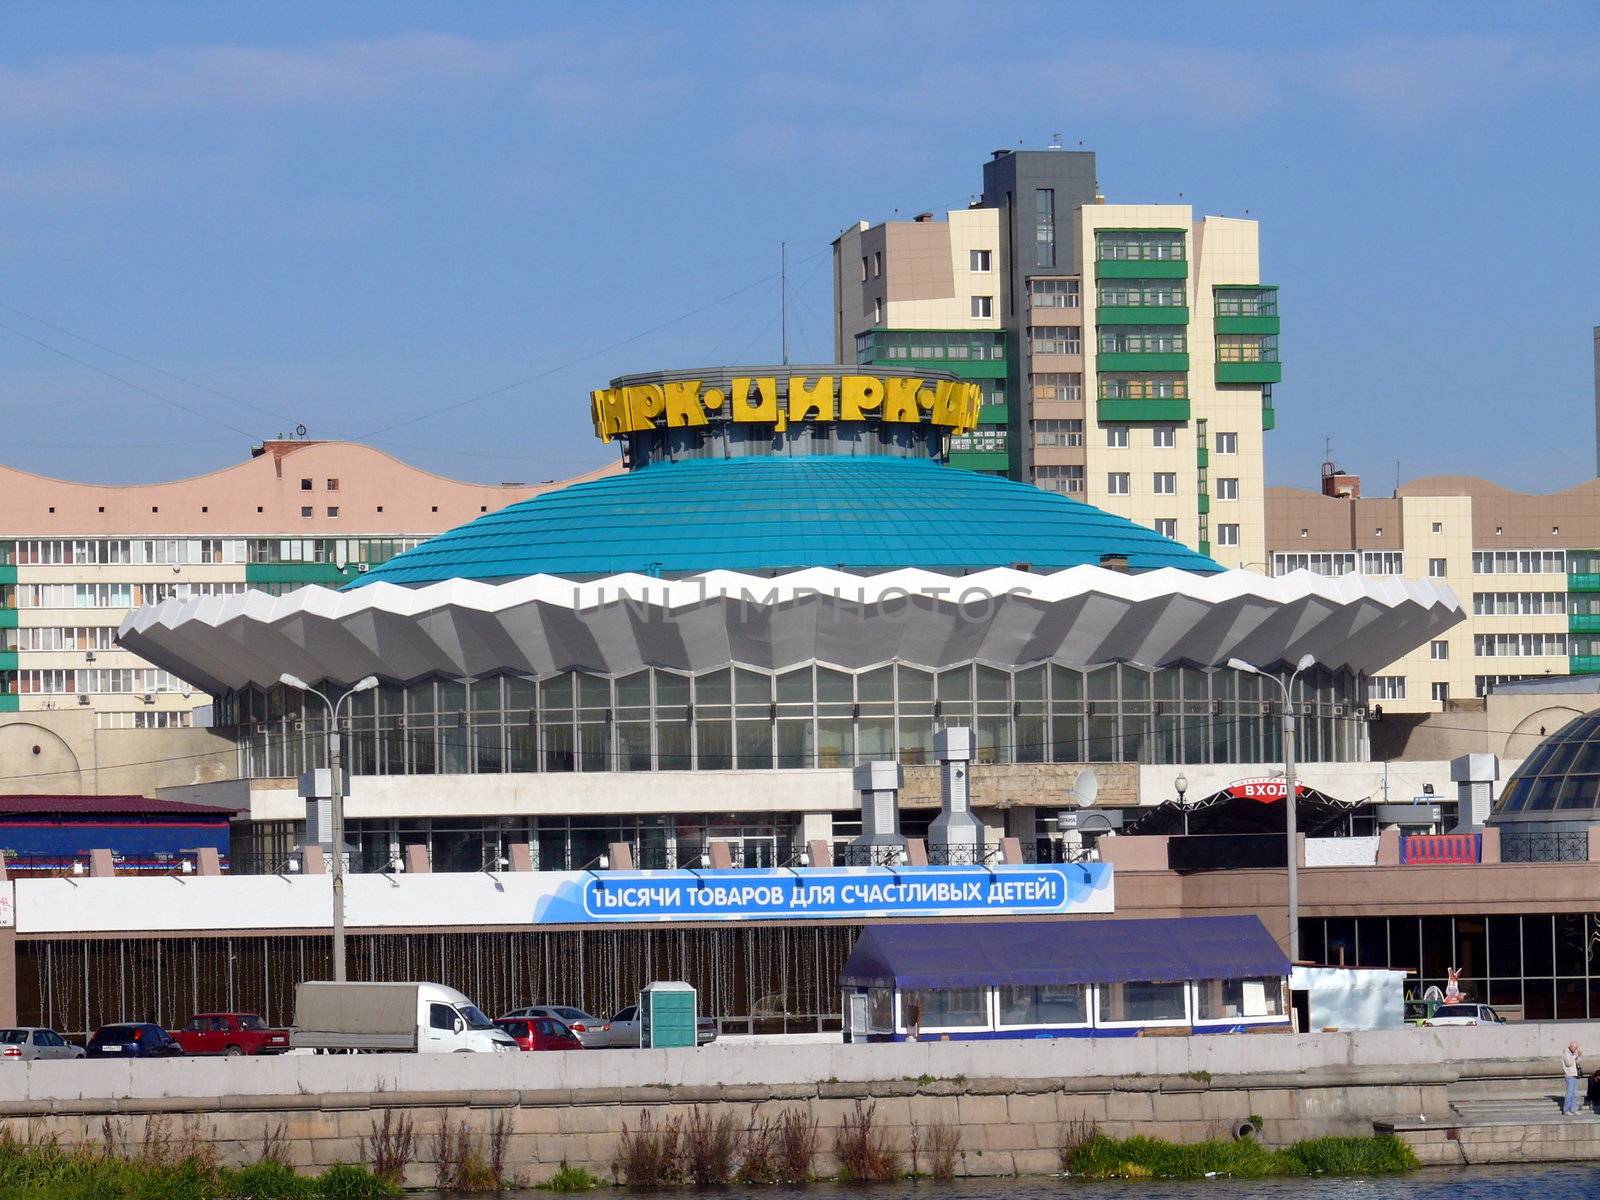 Circus in Chelyabinsk